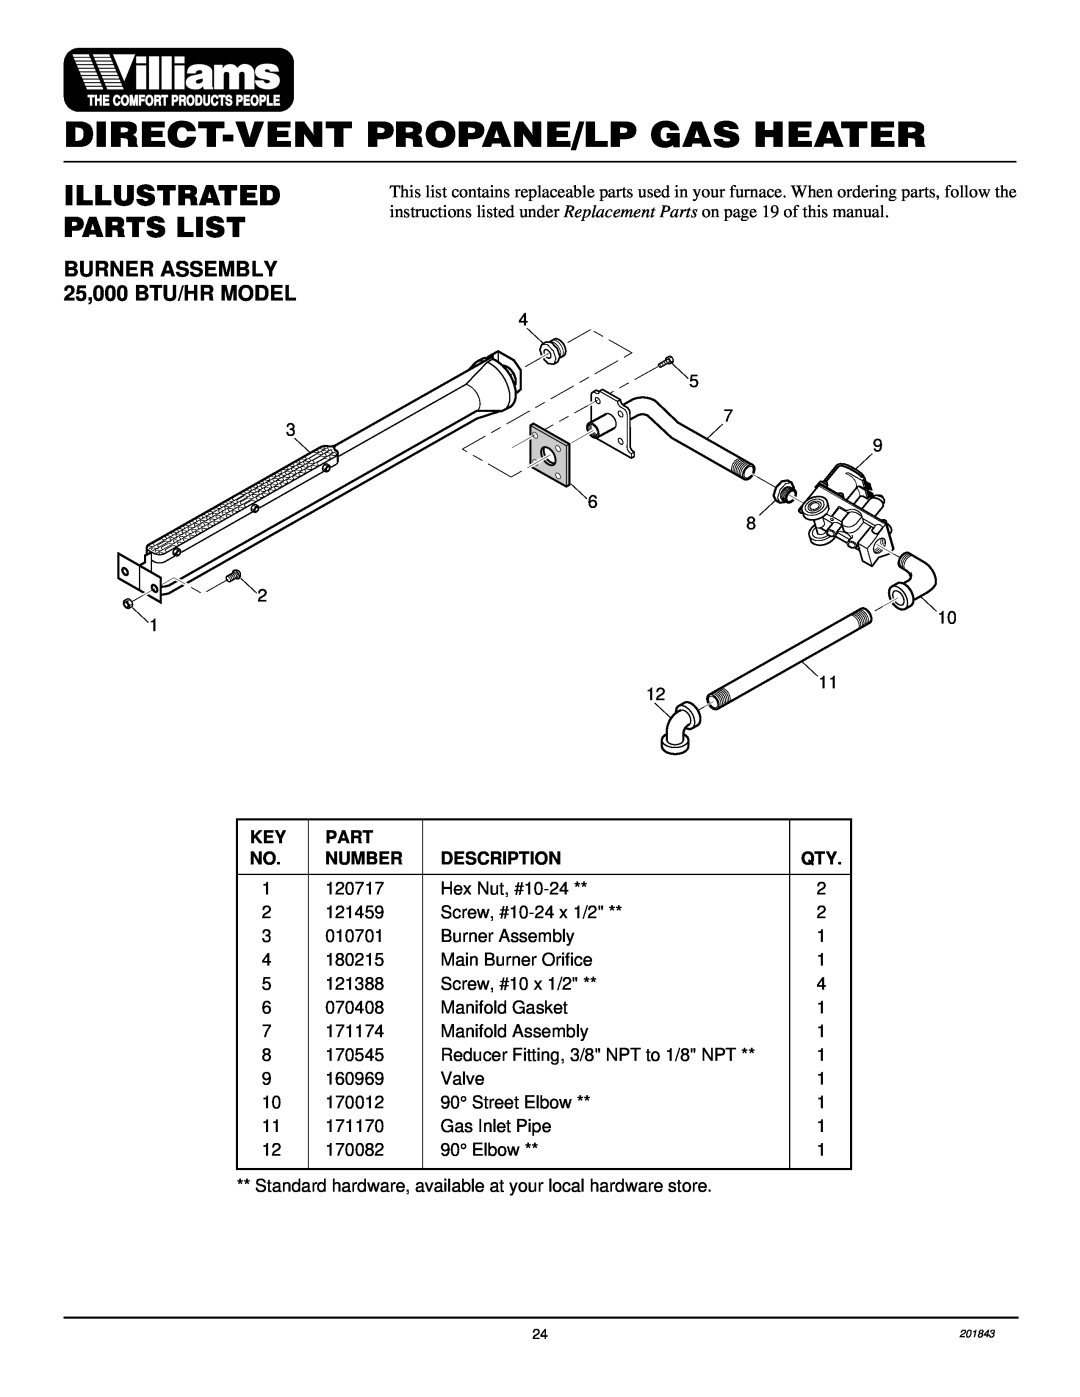 Williams 2503531, 4003531 Direct-Ventpropane/Lp Gas Heater, Illustrated Parts List, BURNER ASSEMBLY 25,000 BTU/HR MODEL 